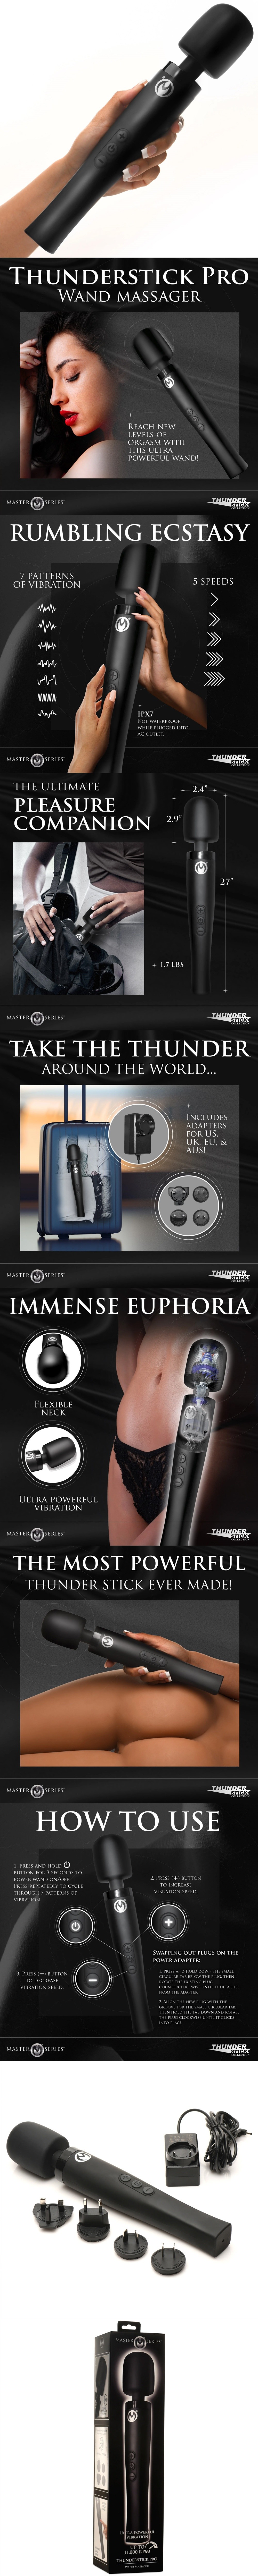 Wand Vibrator Massager Black Luxury Pro Extension